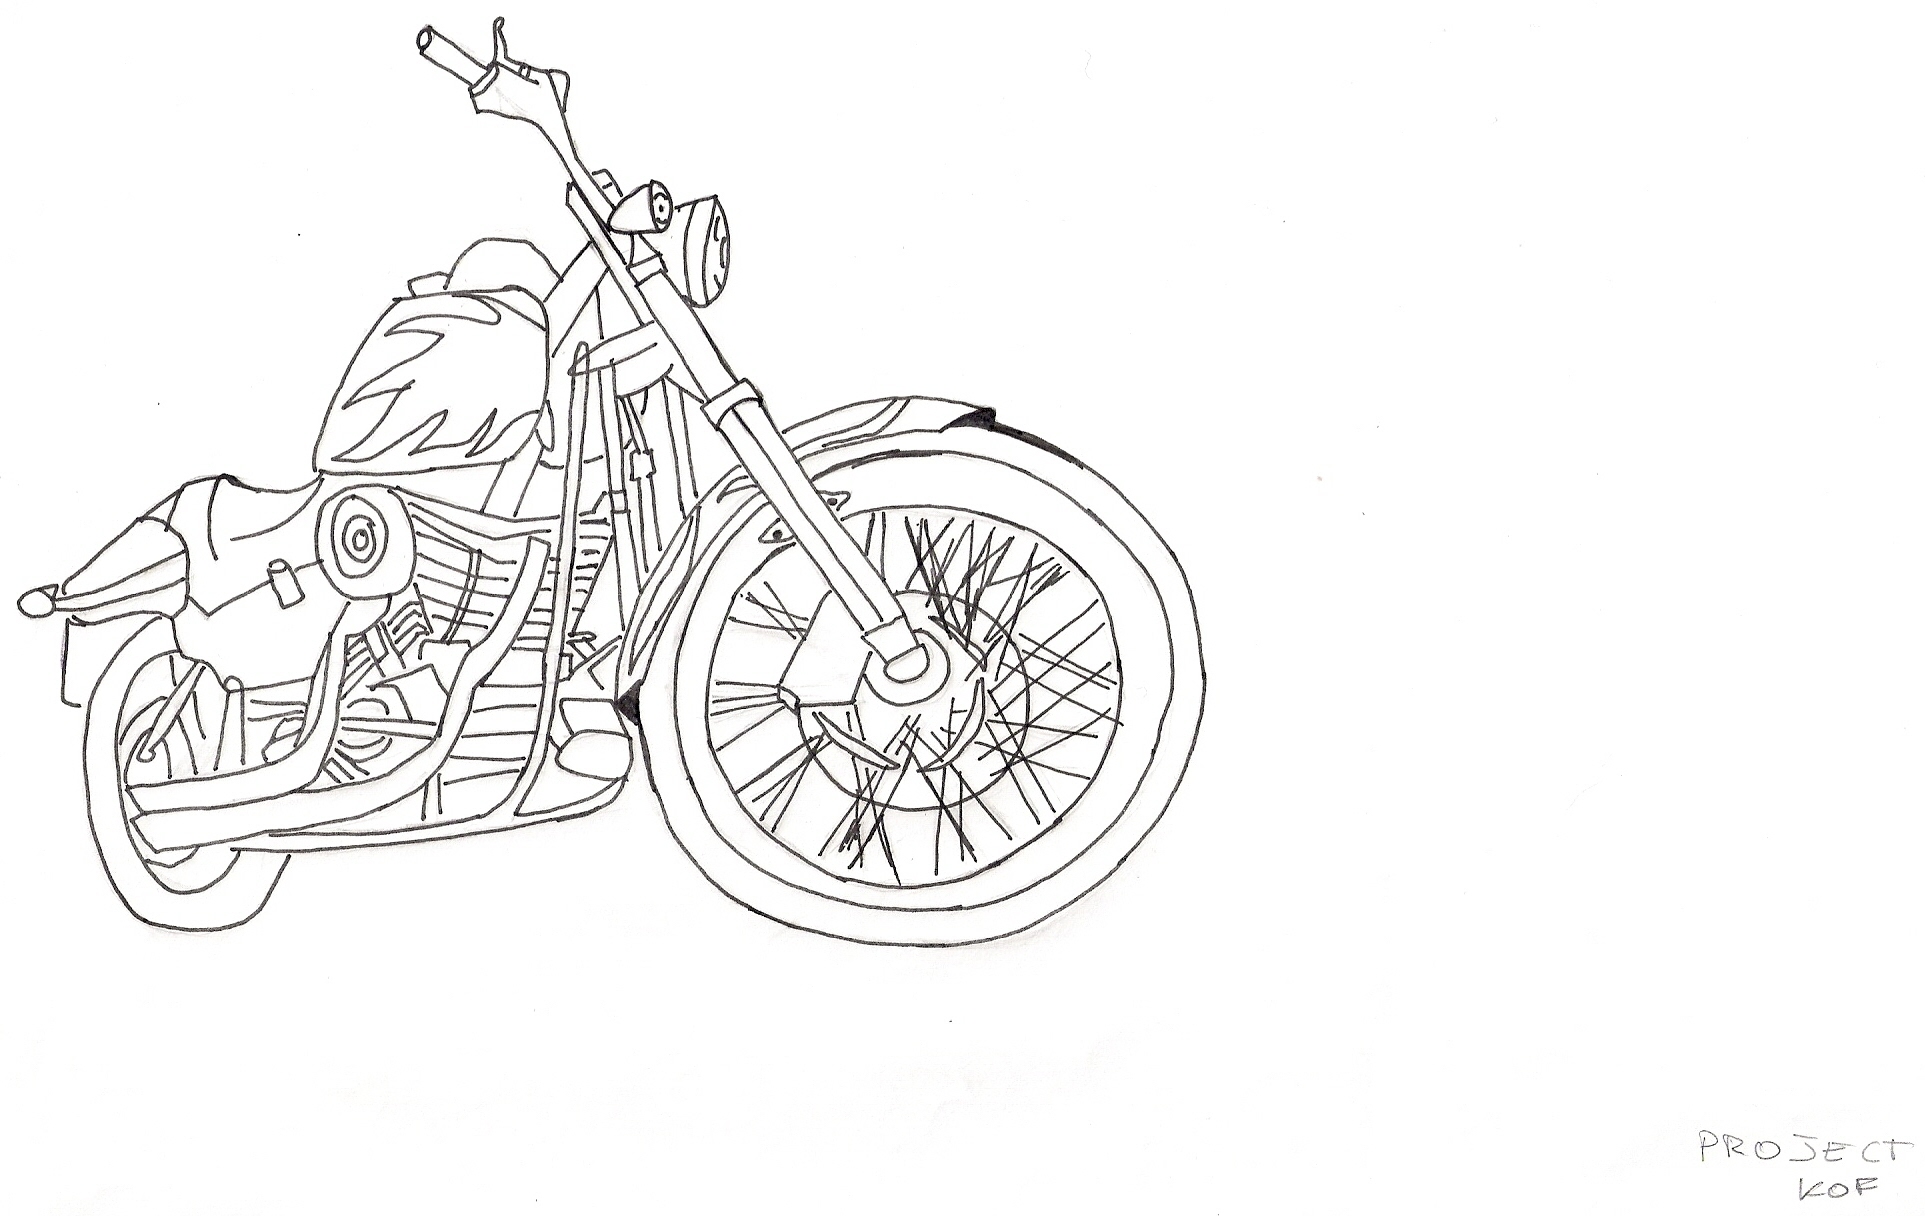  Free Harley Davidson Motocycle Coloring Pages | Harley Davidson Anime coloring pages